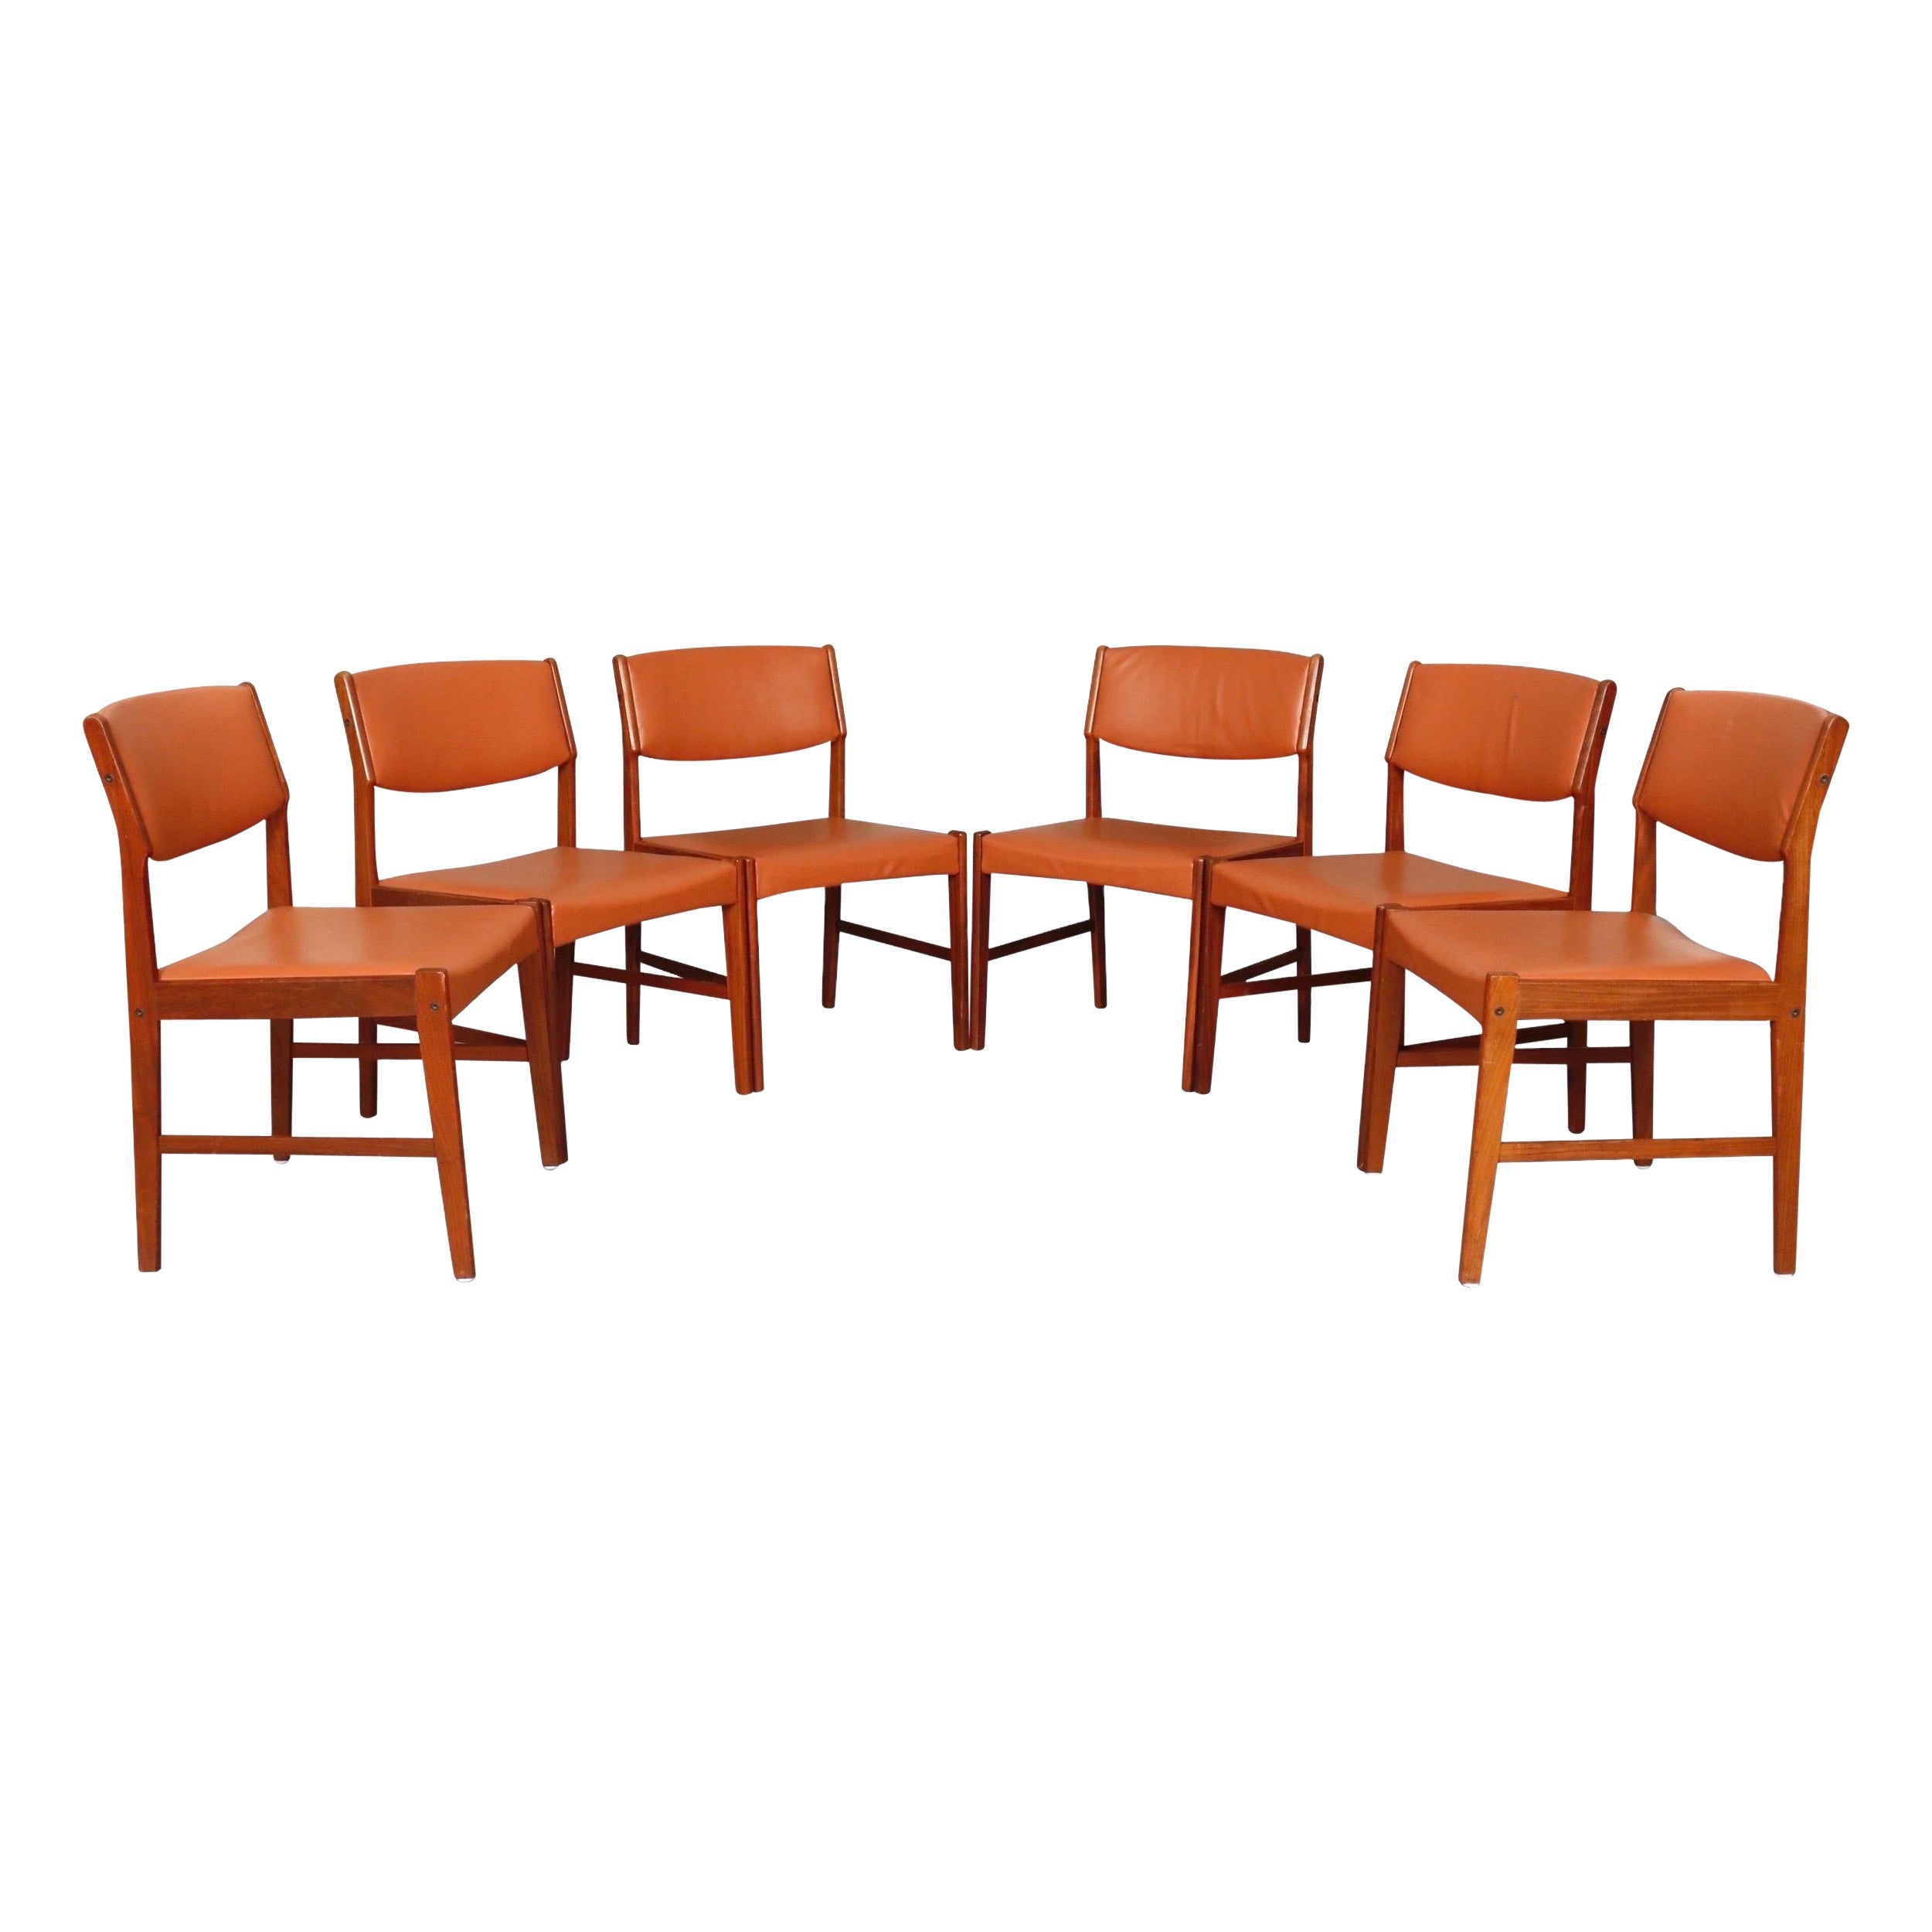 Set of 6 Danish Mid-Century Modern Dining Chairs in Teak